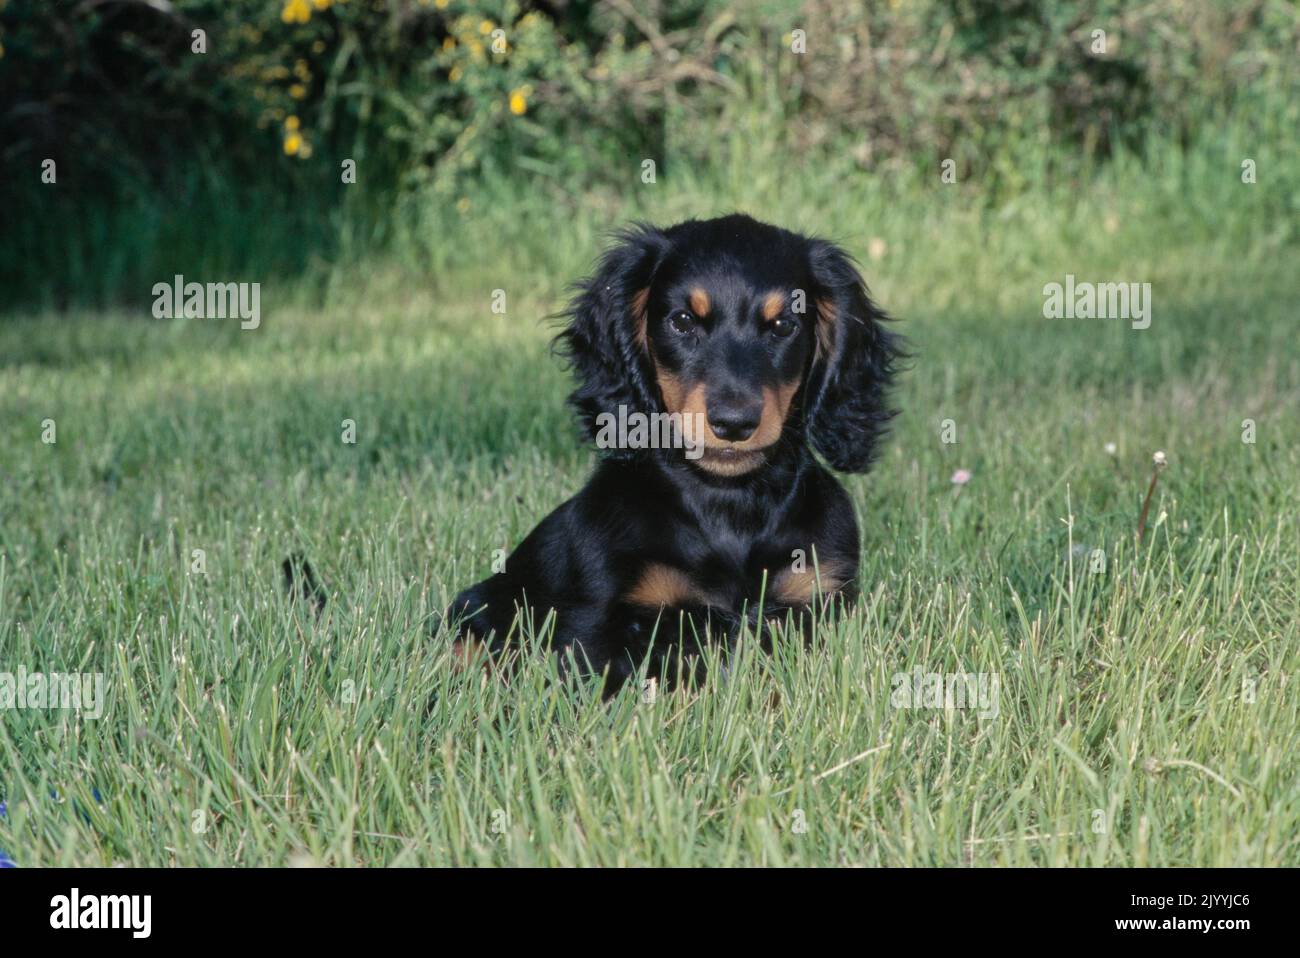 Dachshund in grass field Stock Photo